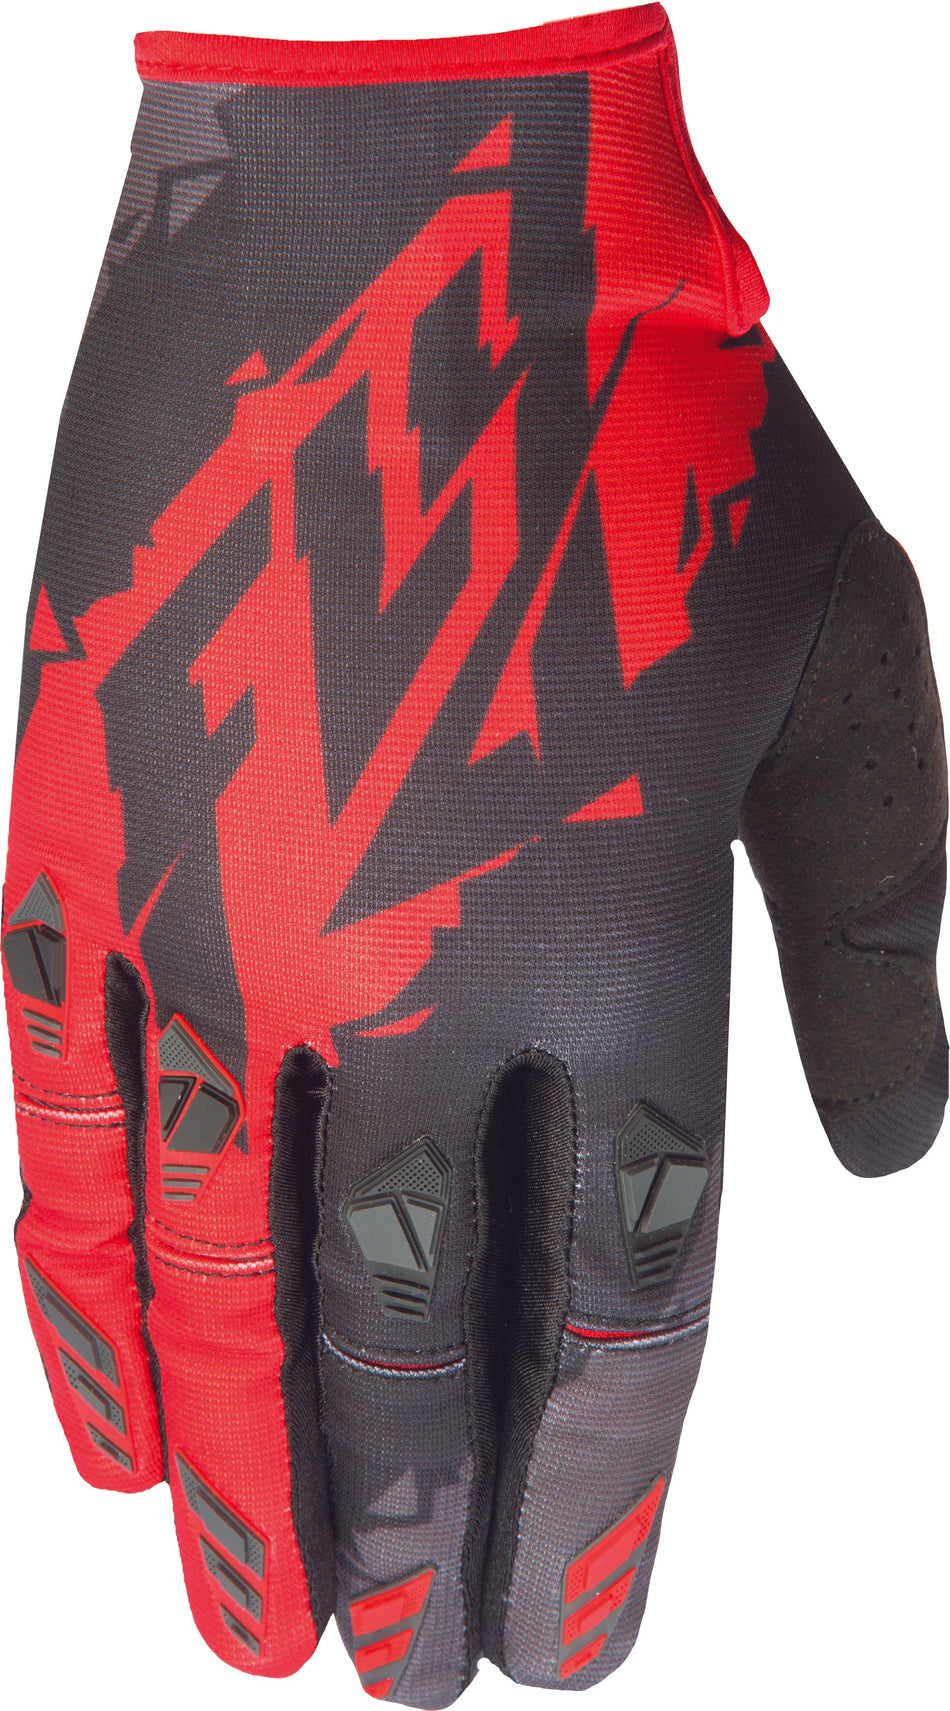 FLY RACING Kinetic Glove Black/Red Sz 4 Ys 370-41204